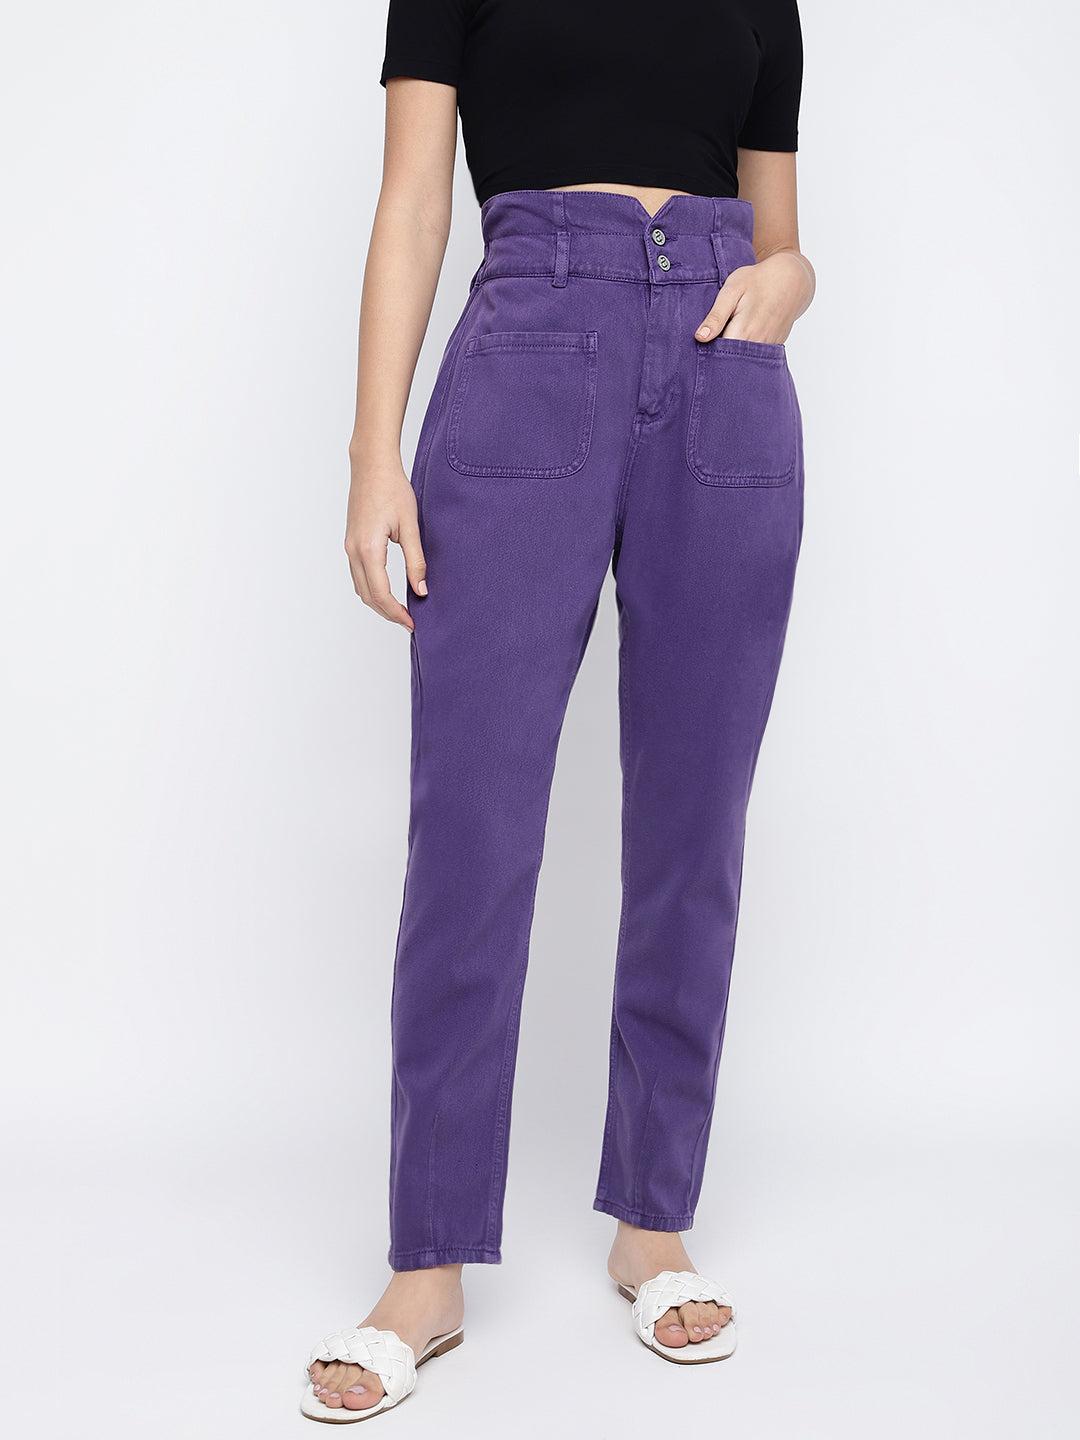 women-cotton-purple-jeans